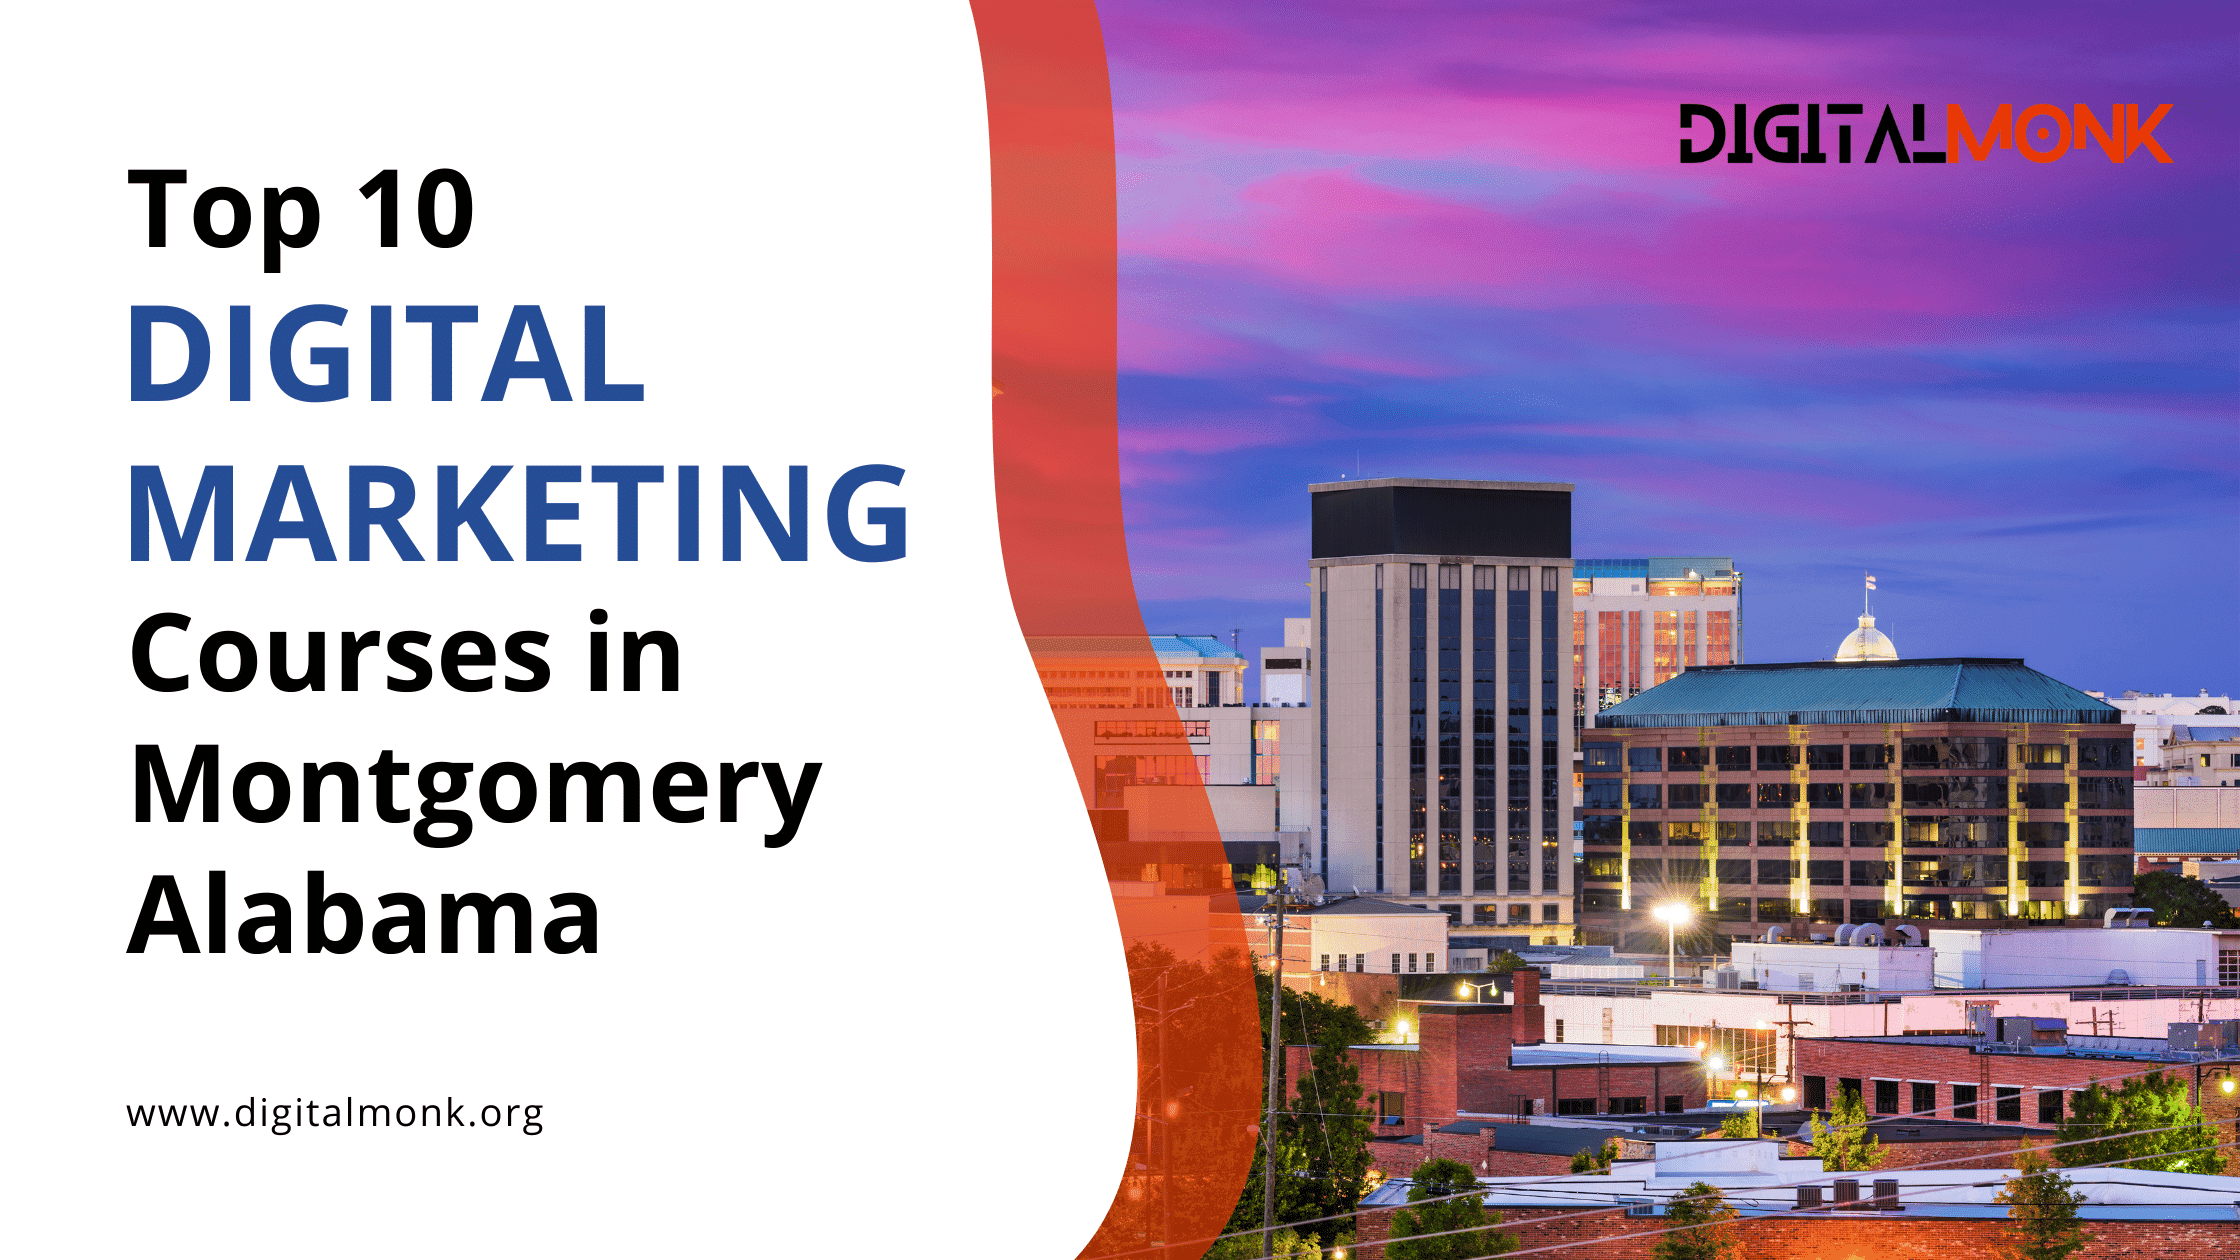 Top 10 Digital Marketing Courses in Montgomery Alabama